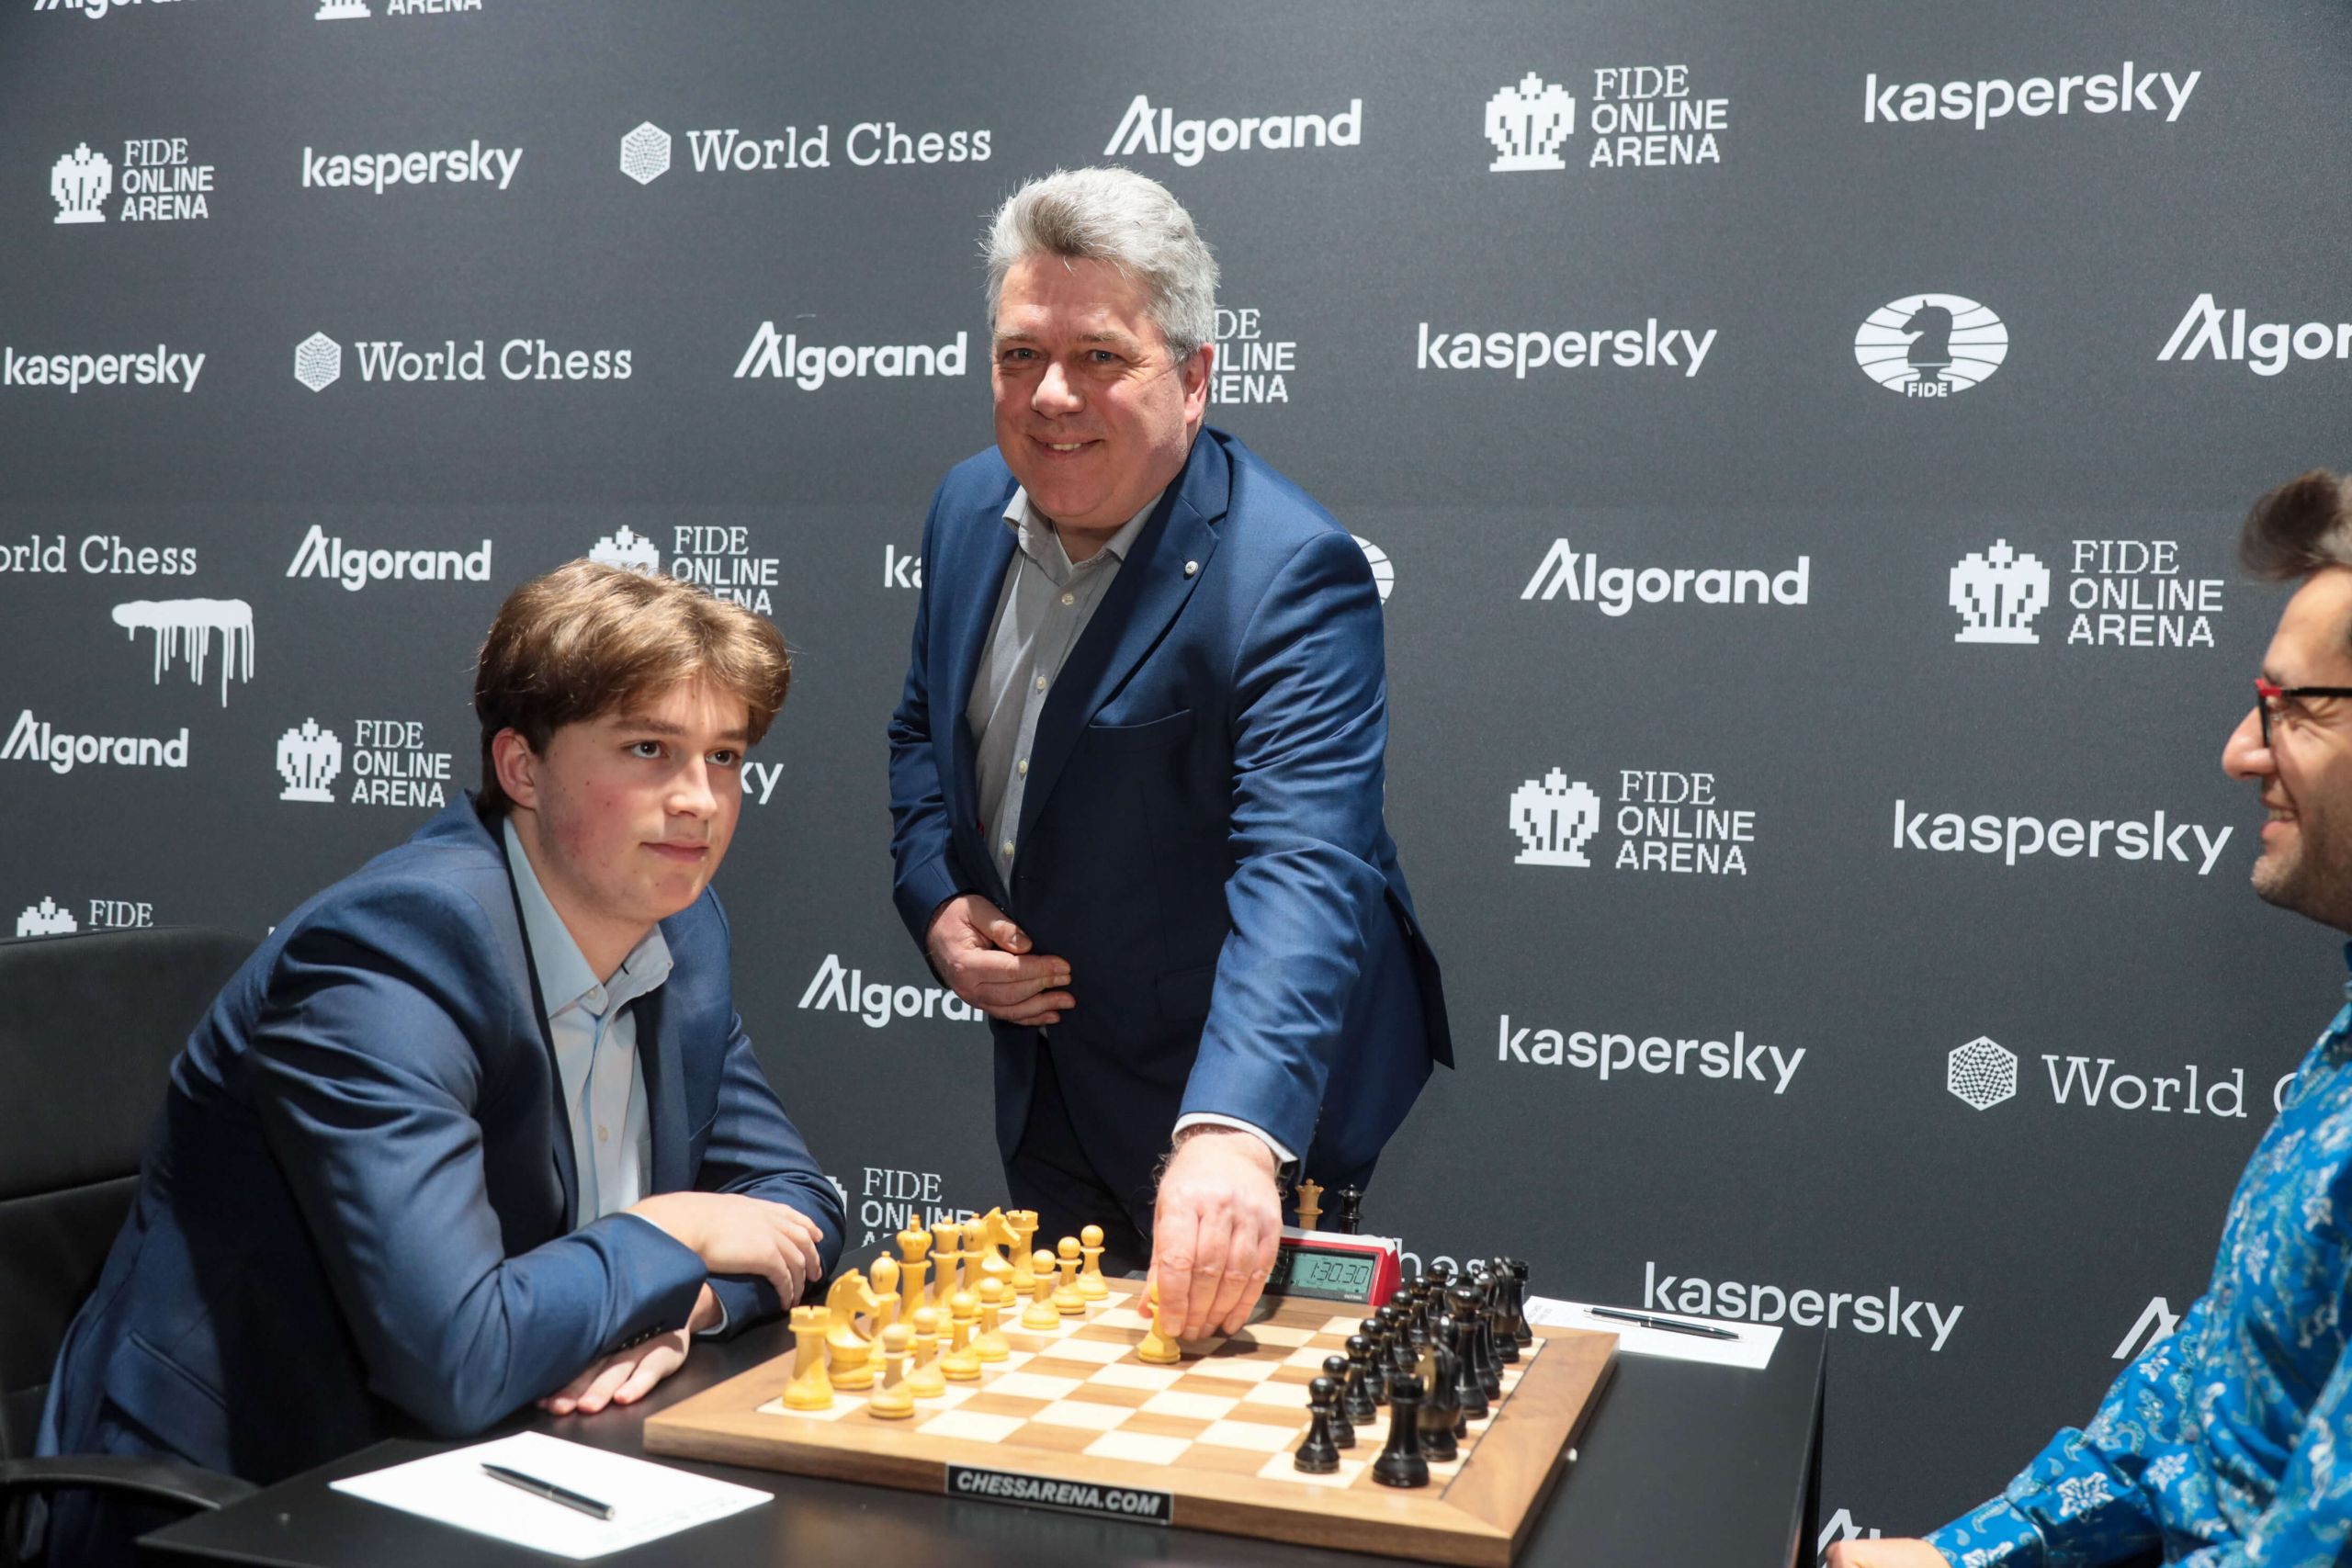 2022 FIDE Grand Prix Berlin Final: Match Moves To Tiebreak After